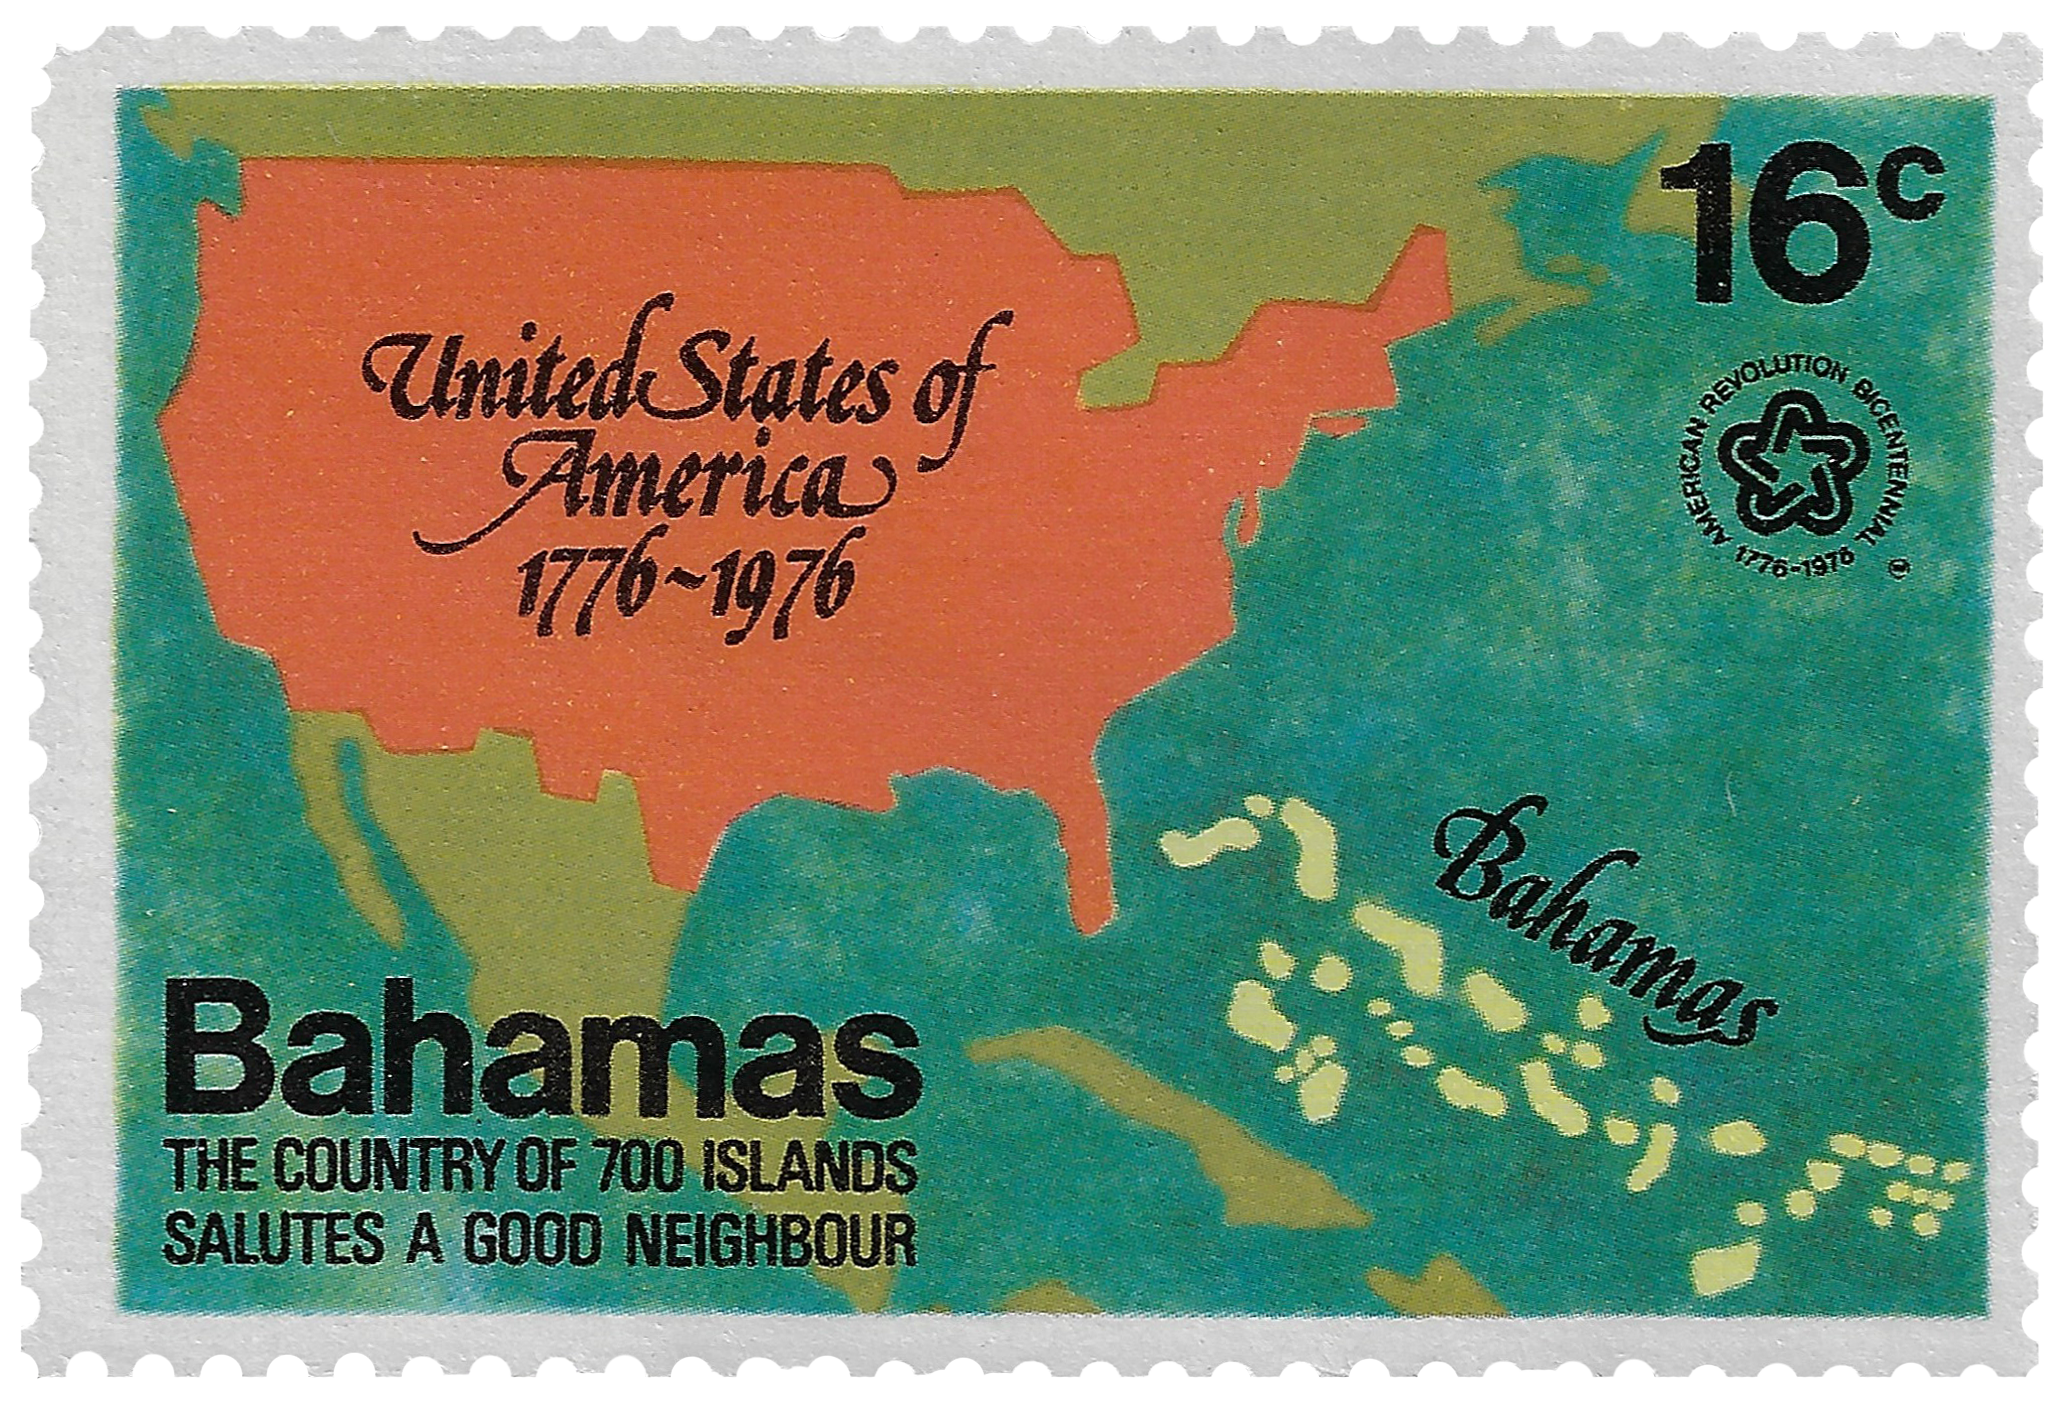 16c 1976, Bahamas, Bicentennial Revolution, United States of America 1776-1976